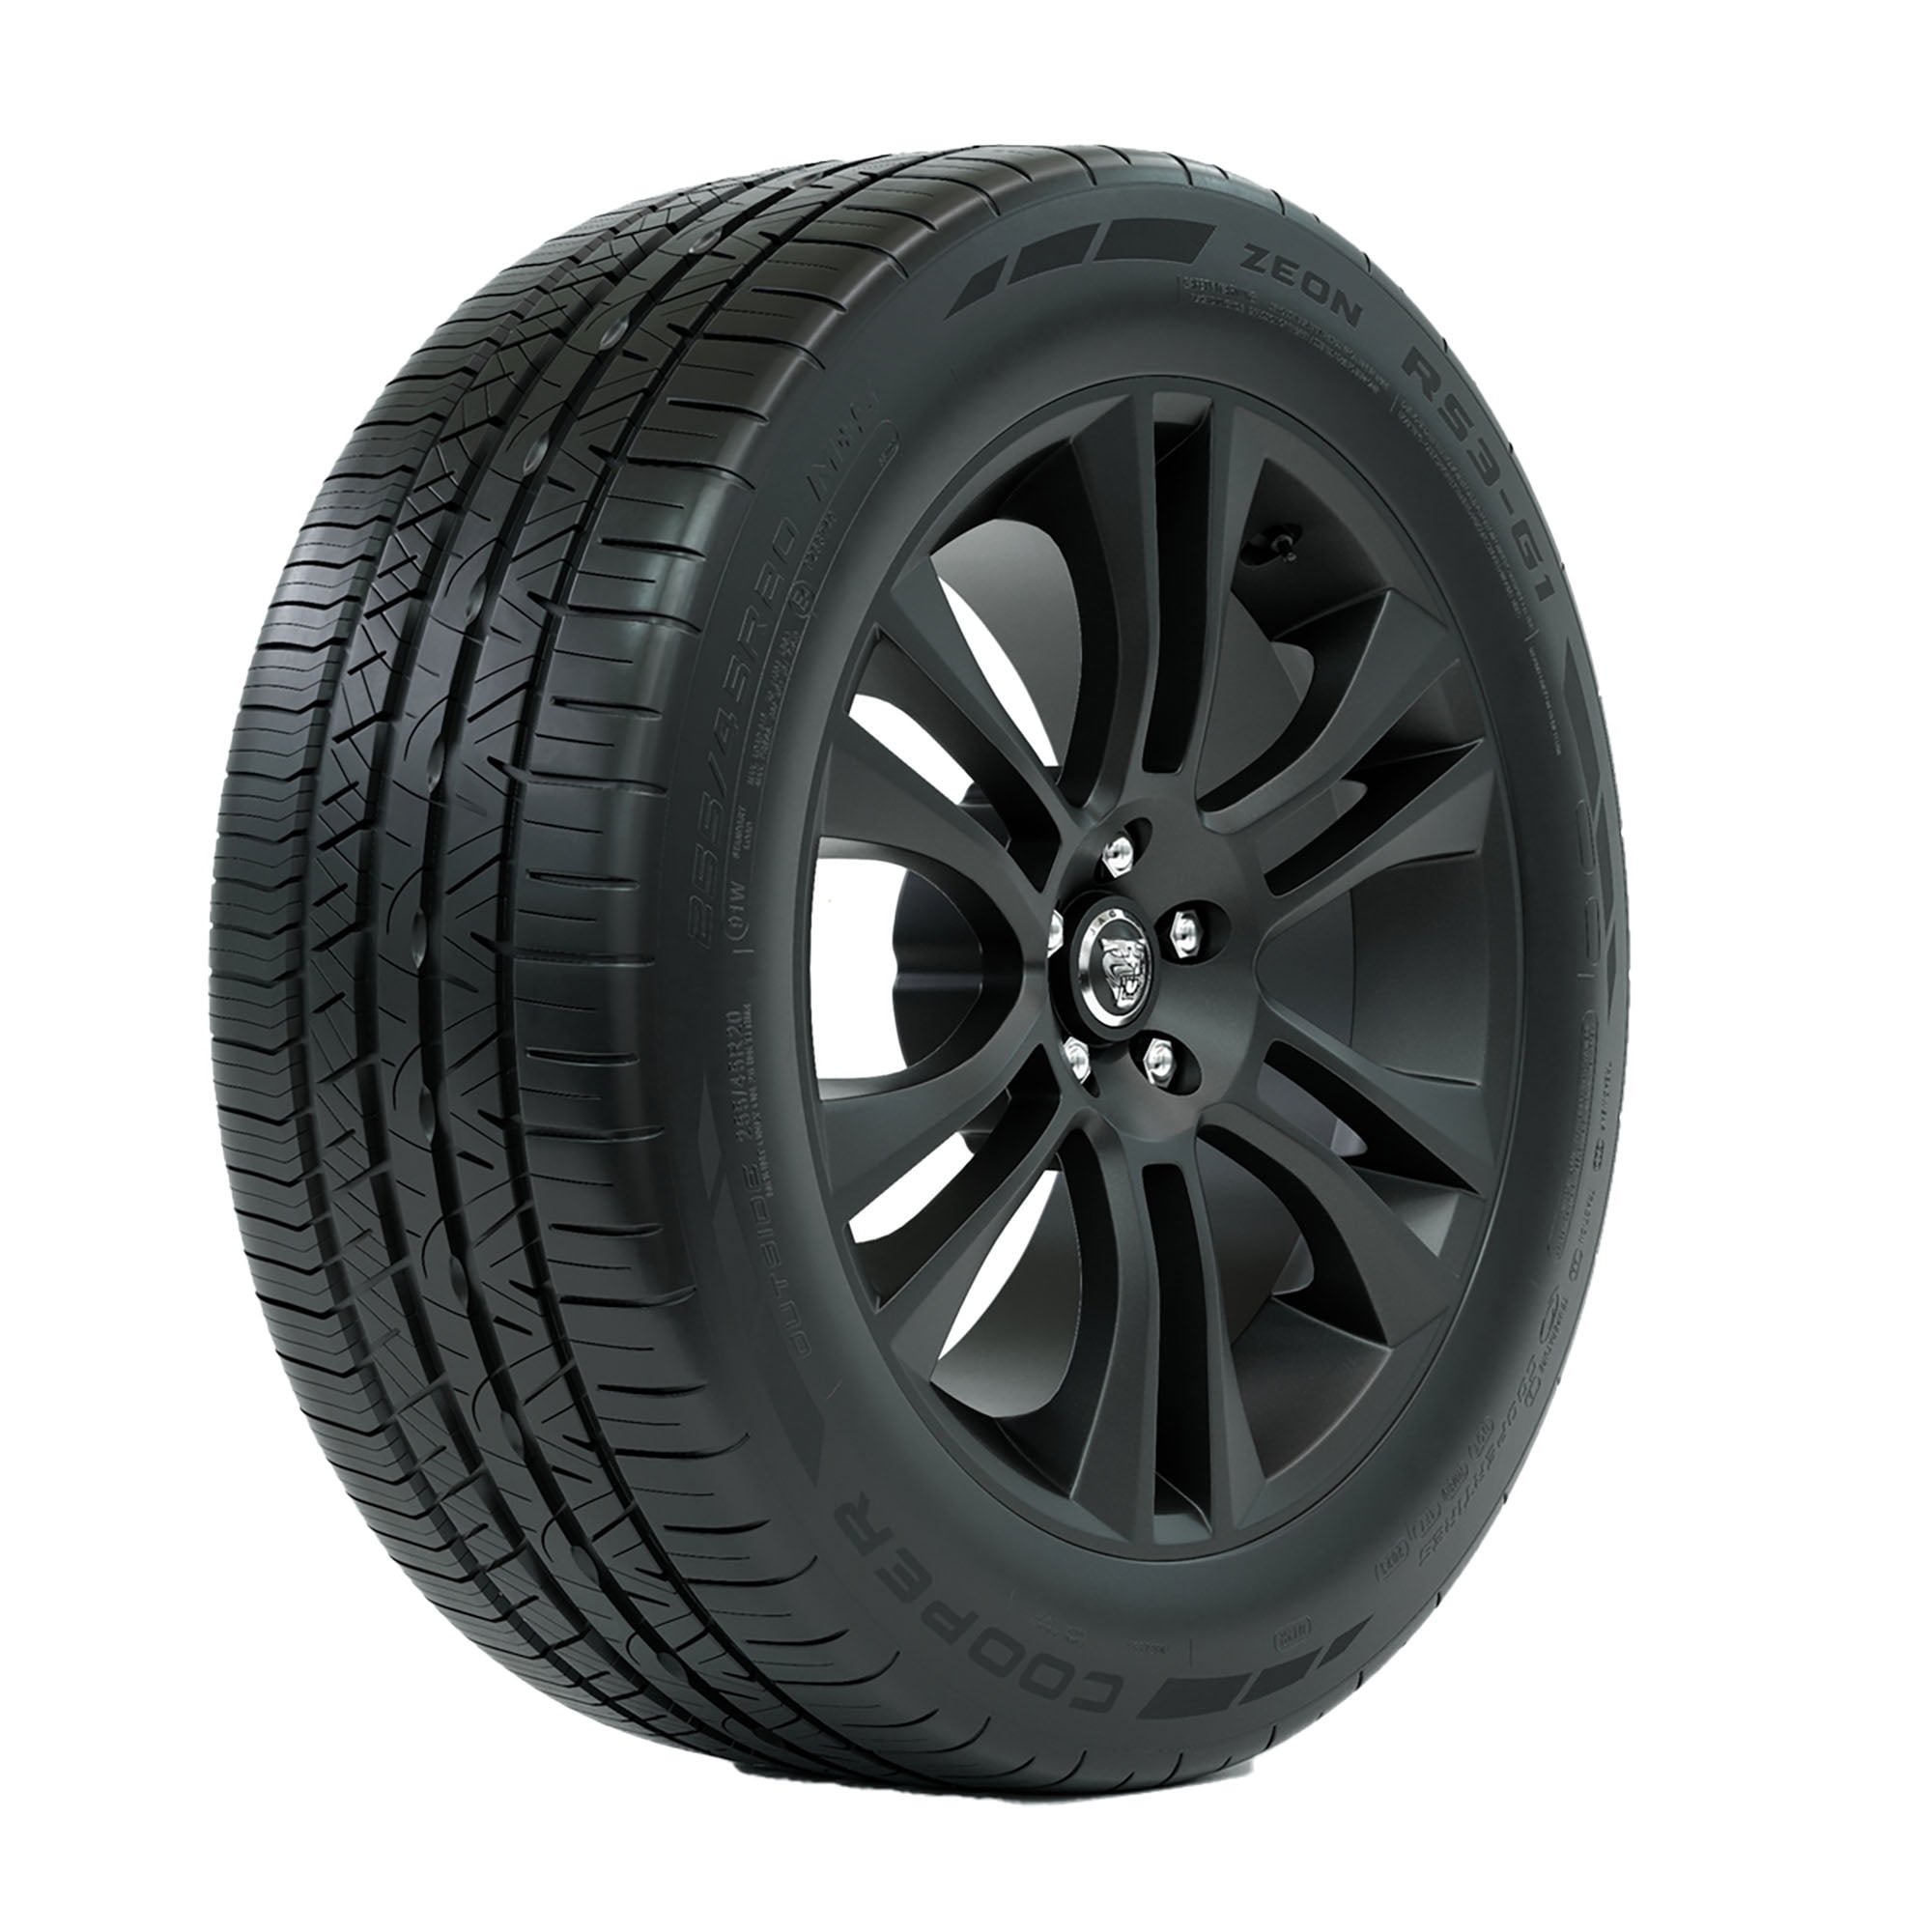 Cooper Zeon RS3-G1 All Season 245/45R17 95W Passenger Tire